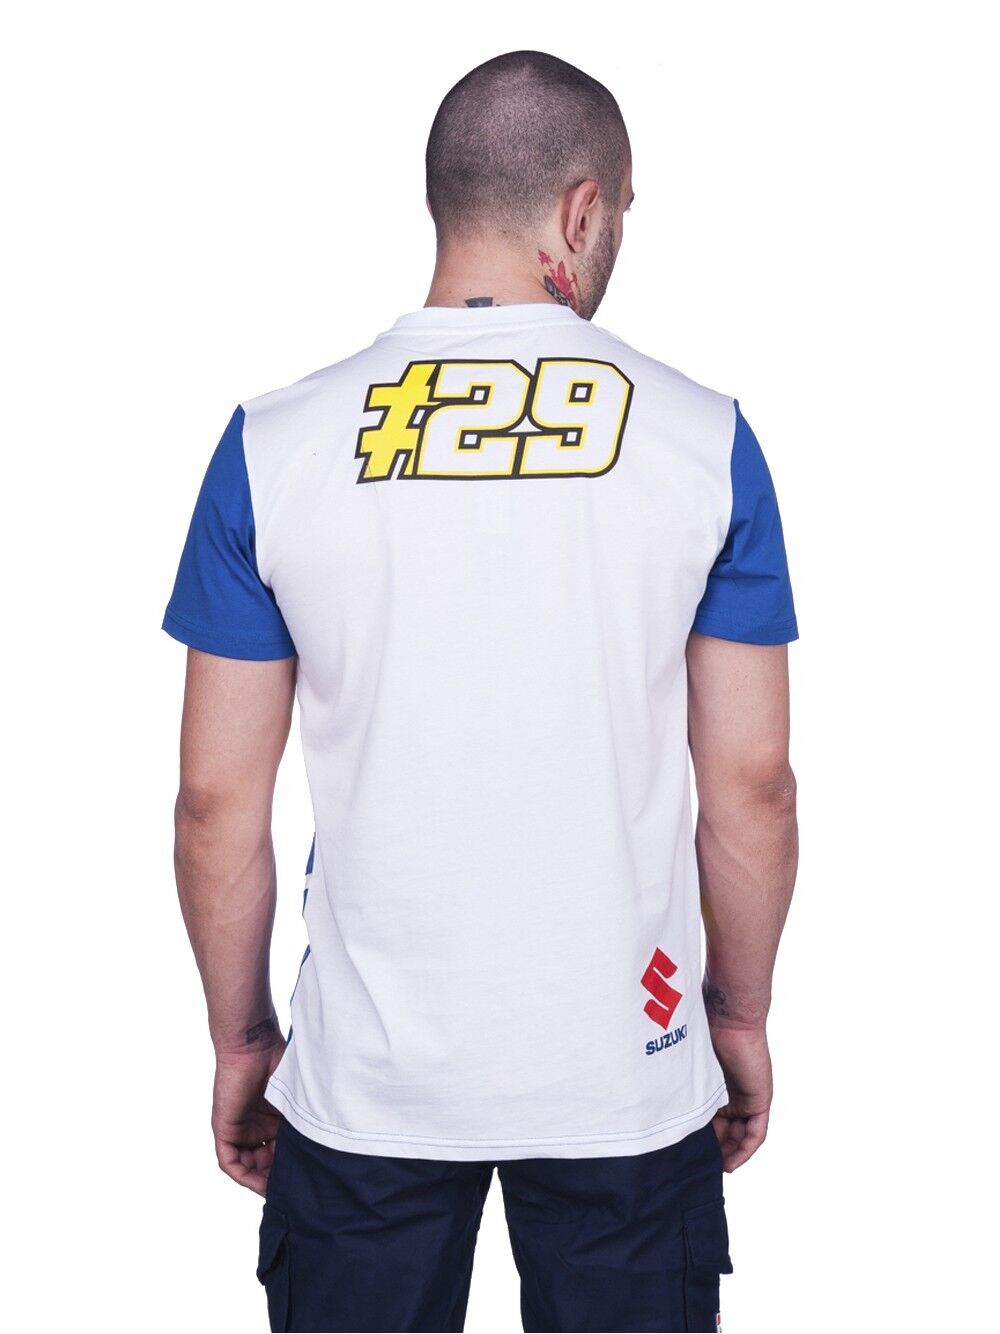 New Official Andrea Ianonne 29 Dual Suzuki T Shirt - 17 39008